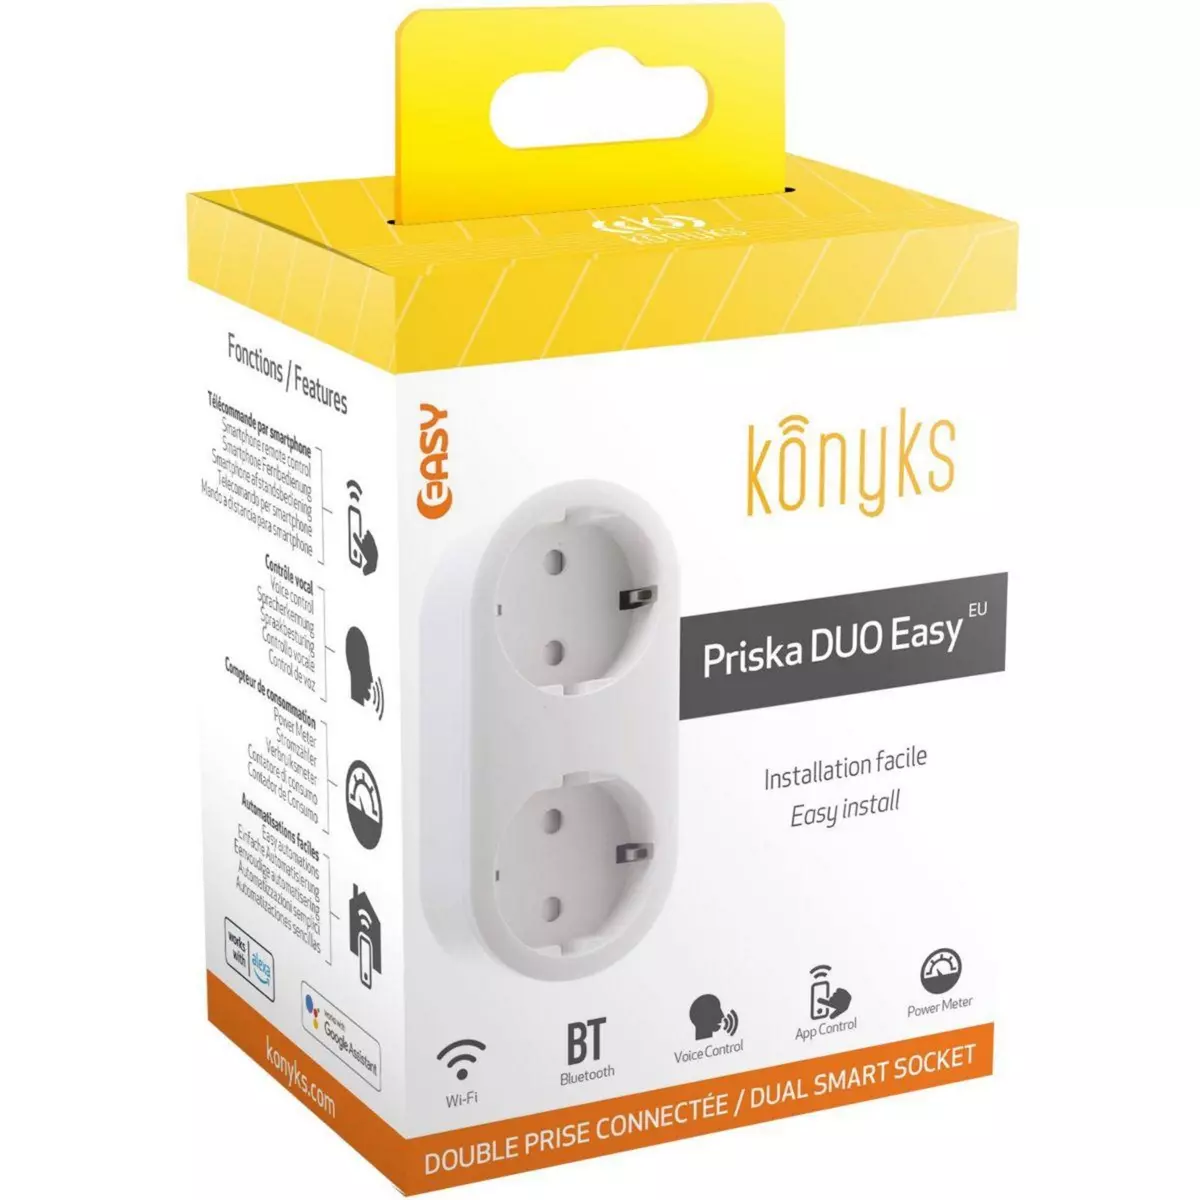 KONYKS Prise connectée Priska Duo easy Wi-Fi + BT